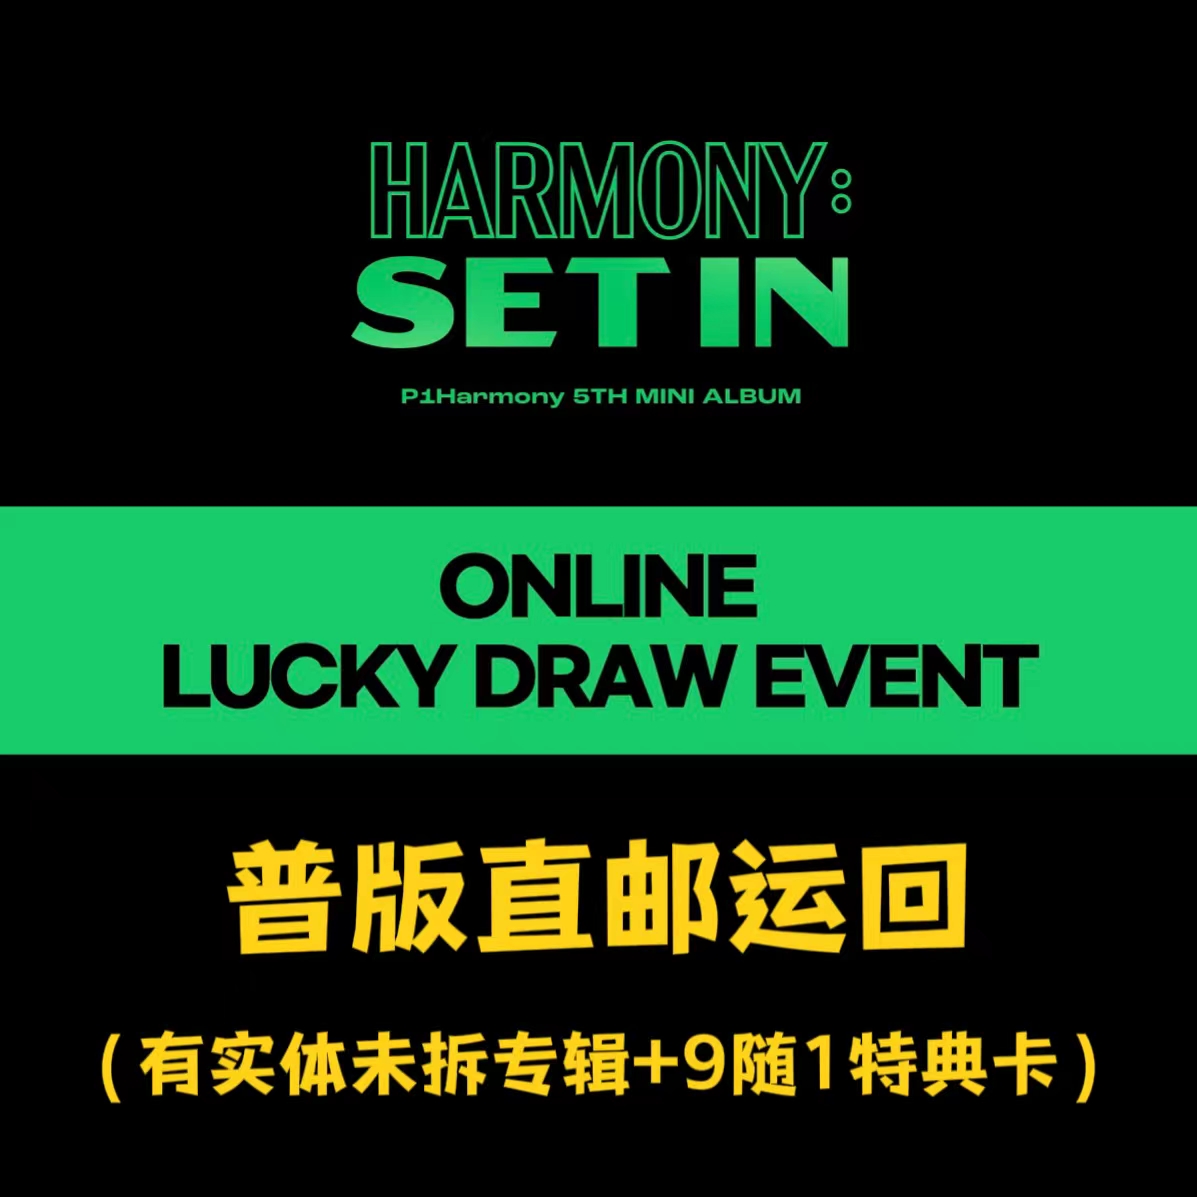 [全款 裸专][Online Lucky Draw Event] P1Harmony - 迷你5辑 [HARMONY : SET IN] (随机版本) **不能退款**_Wildness_尹起昊DareU